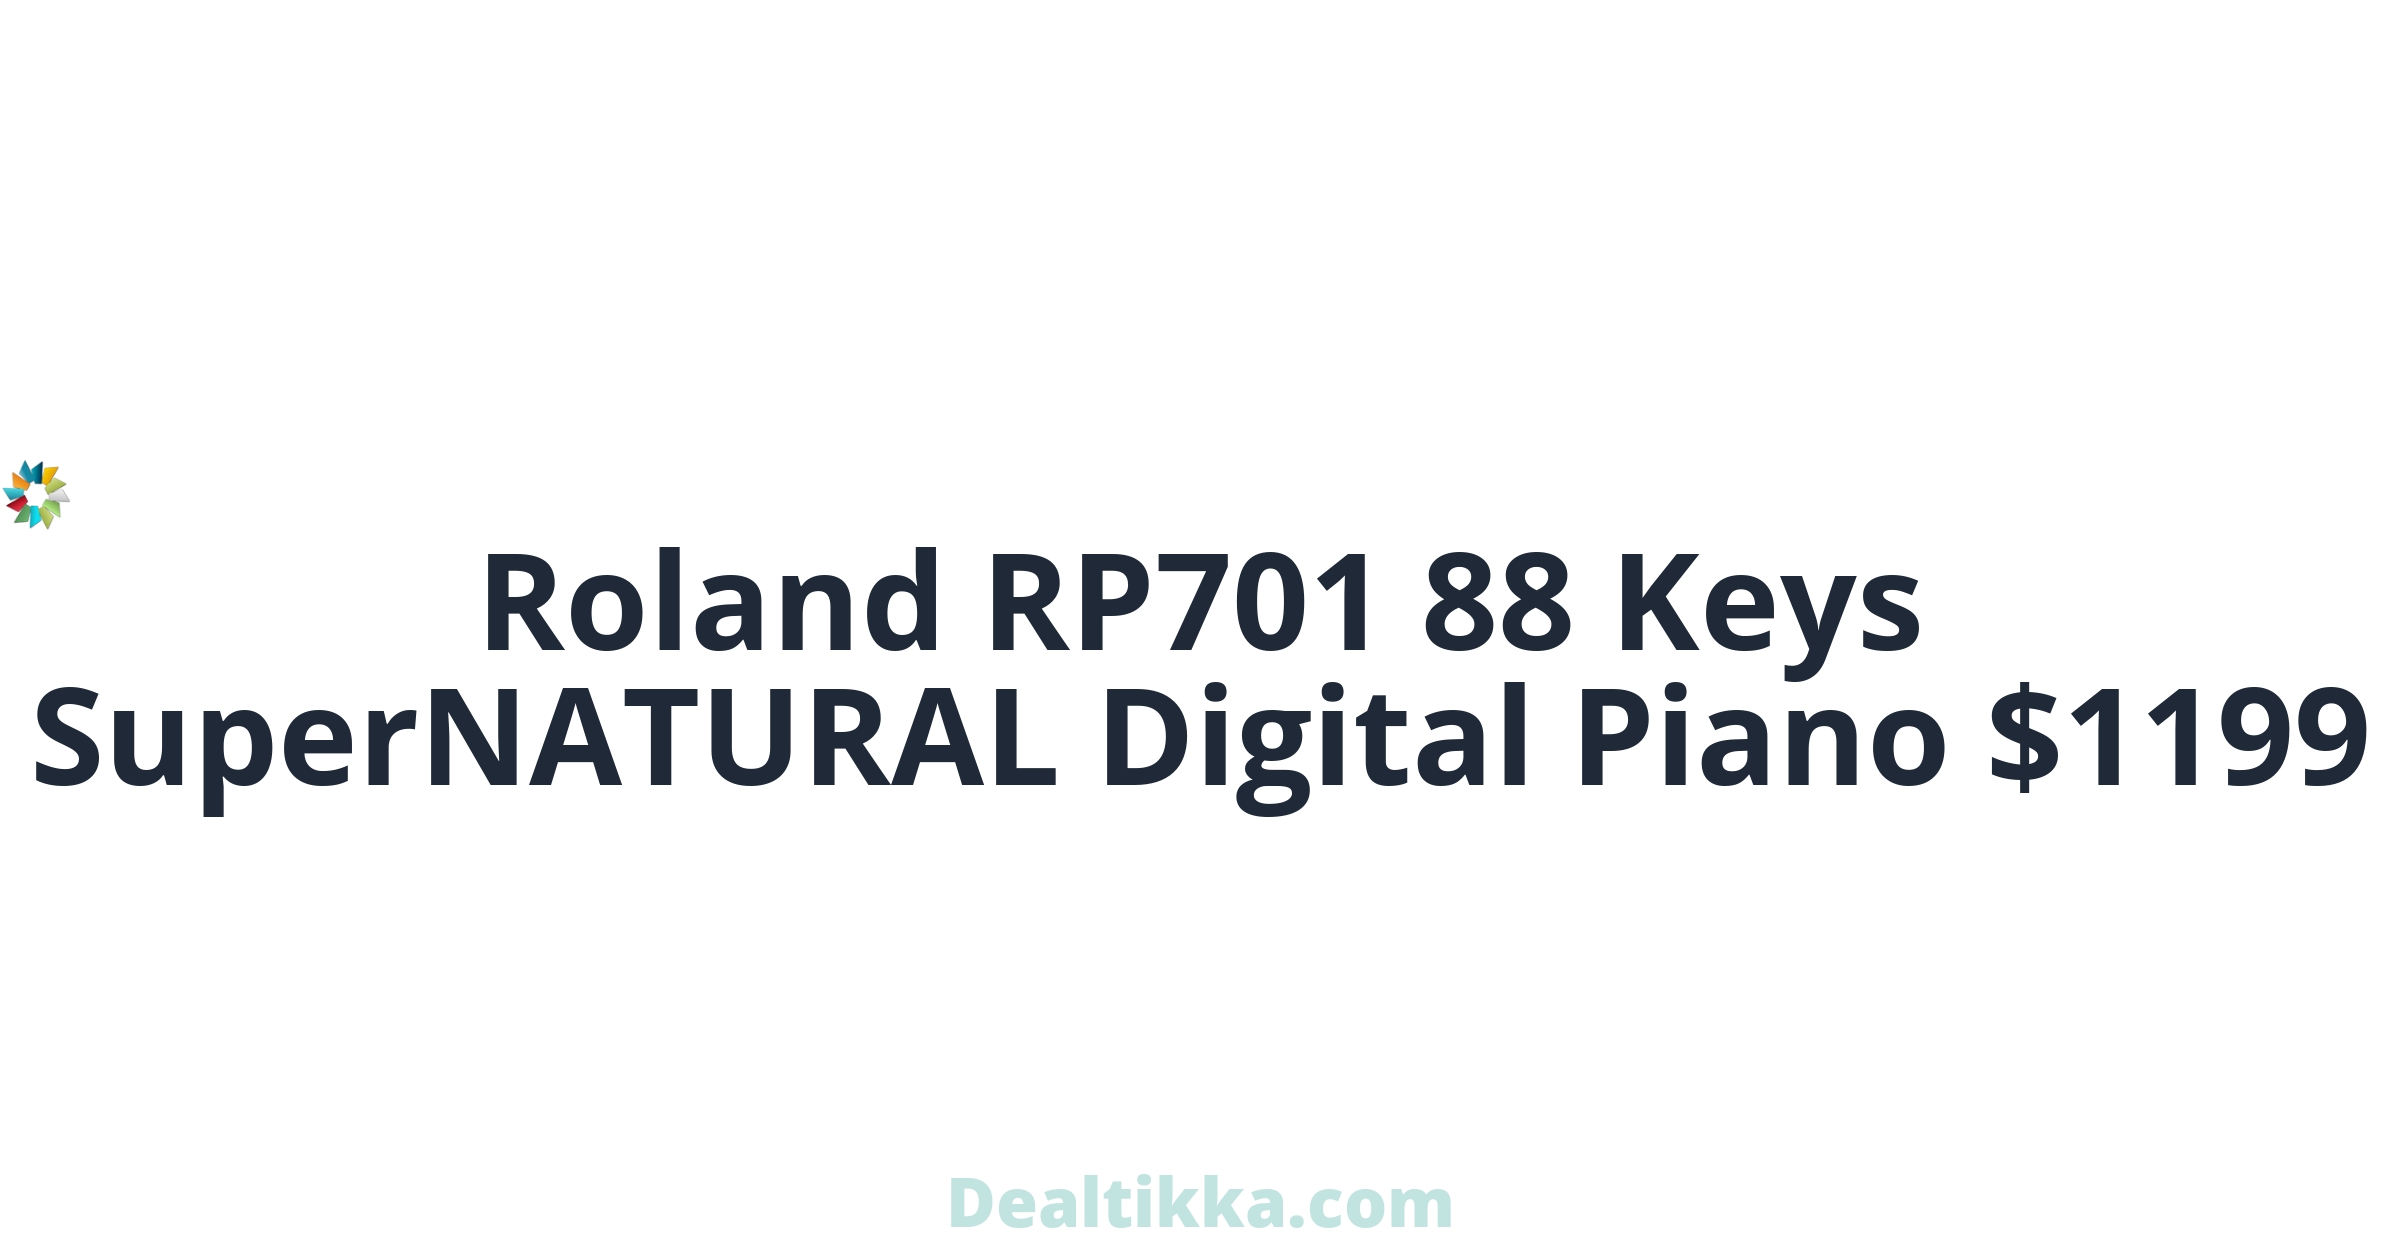 og?fontFamily=Roboto&title=Roland+RP701+